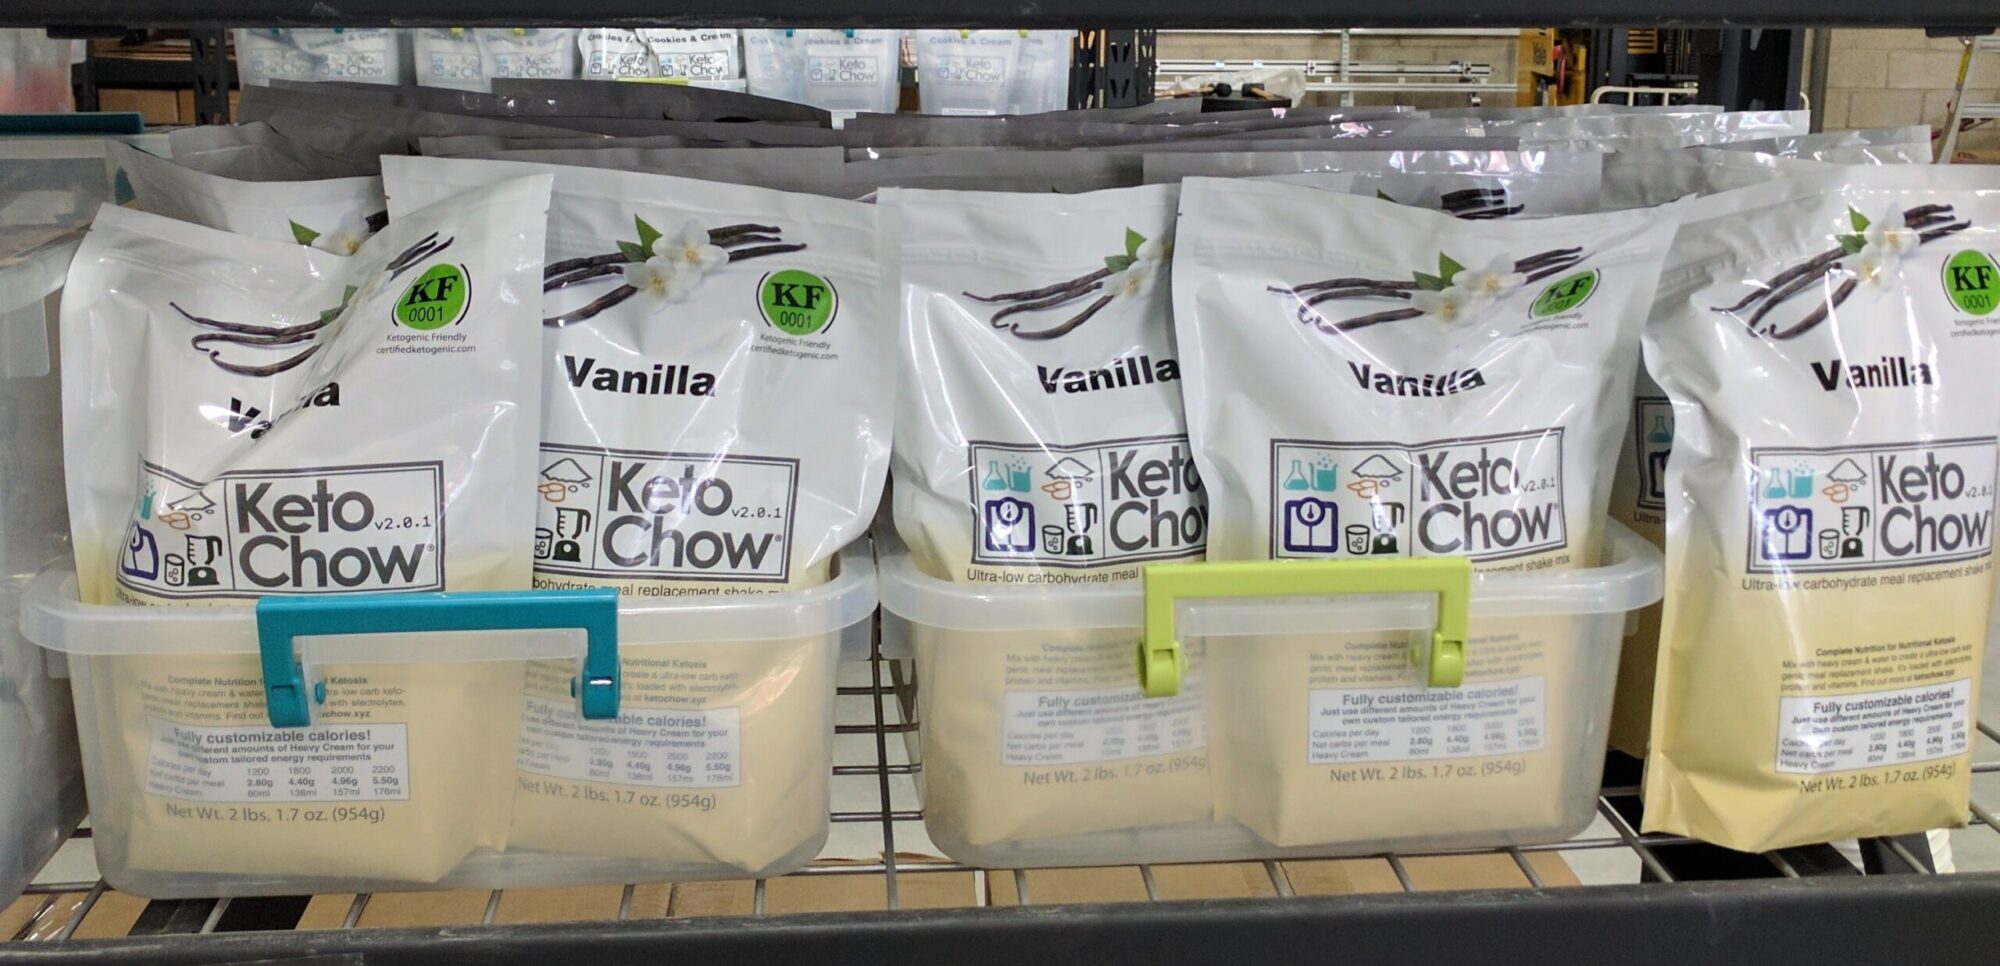 keto chow vanilla 21 meal bulk bags